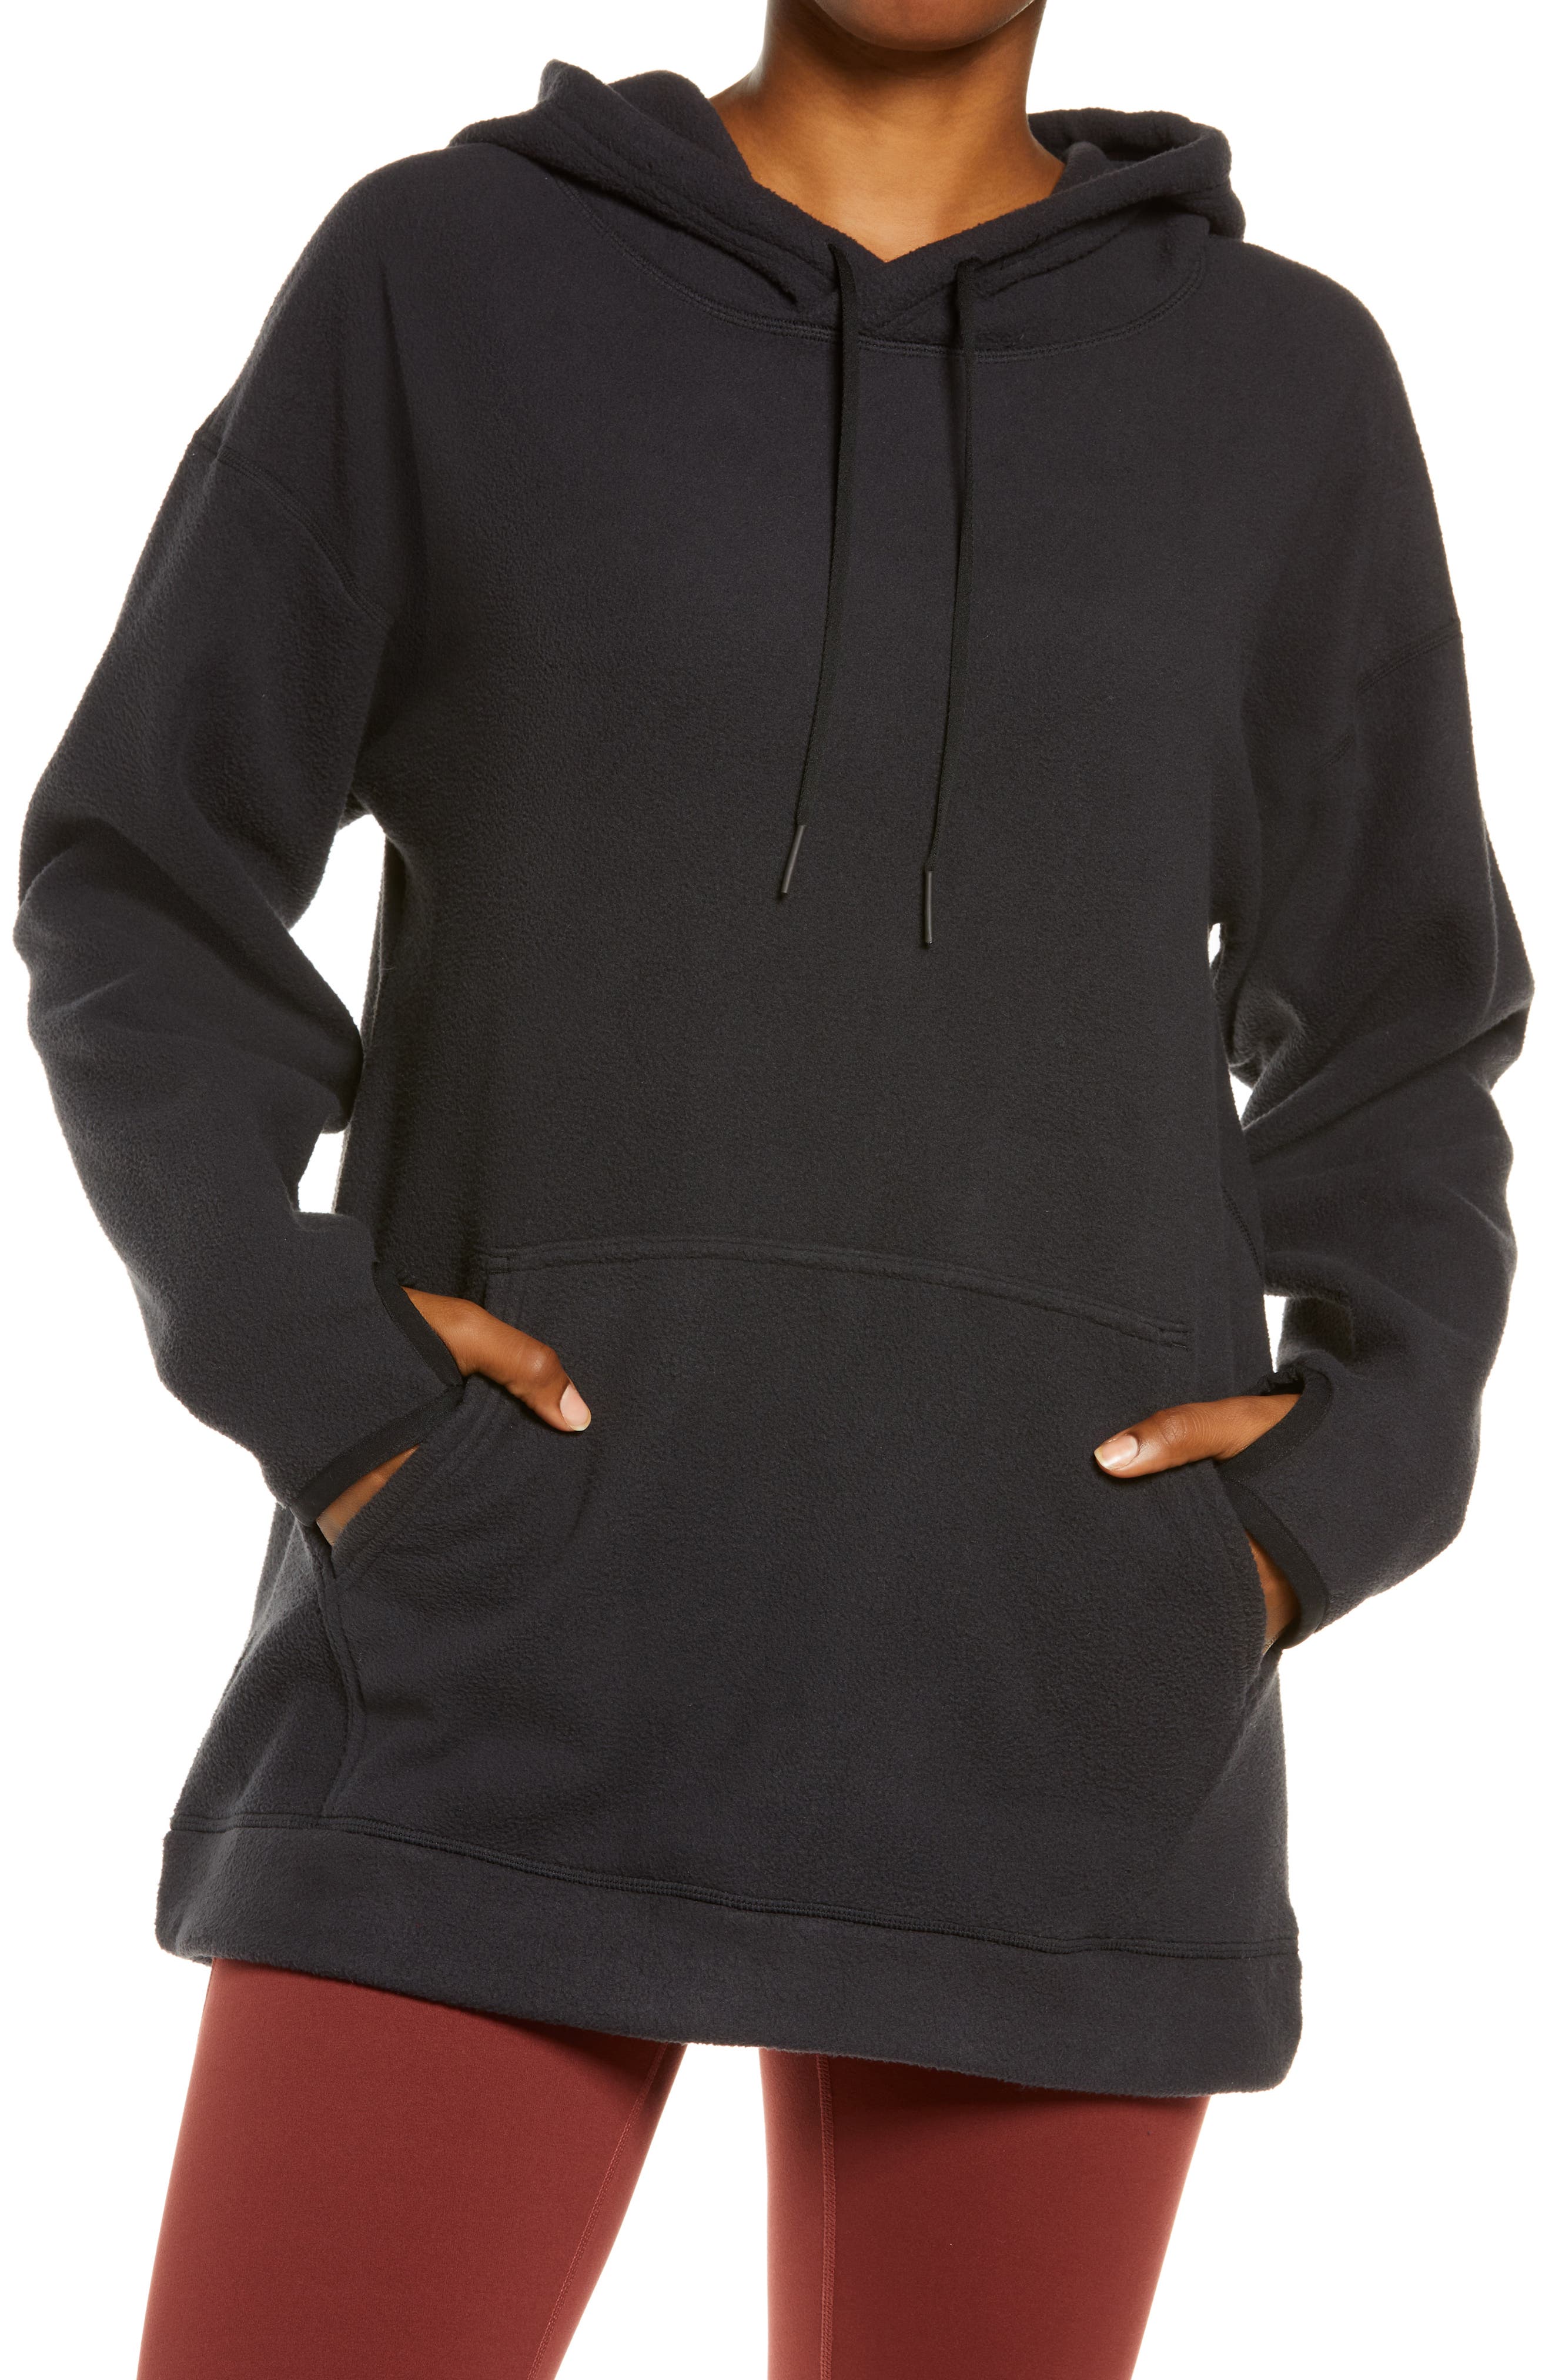 Grey Forest Night Ladies Basic Lightweight Hoodie Hooded Pullover Sweatshirt with Drawstring Hood 